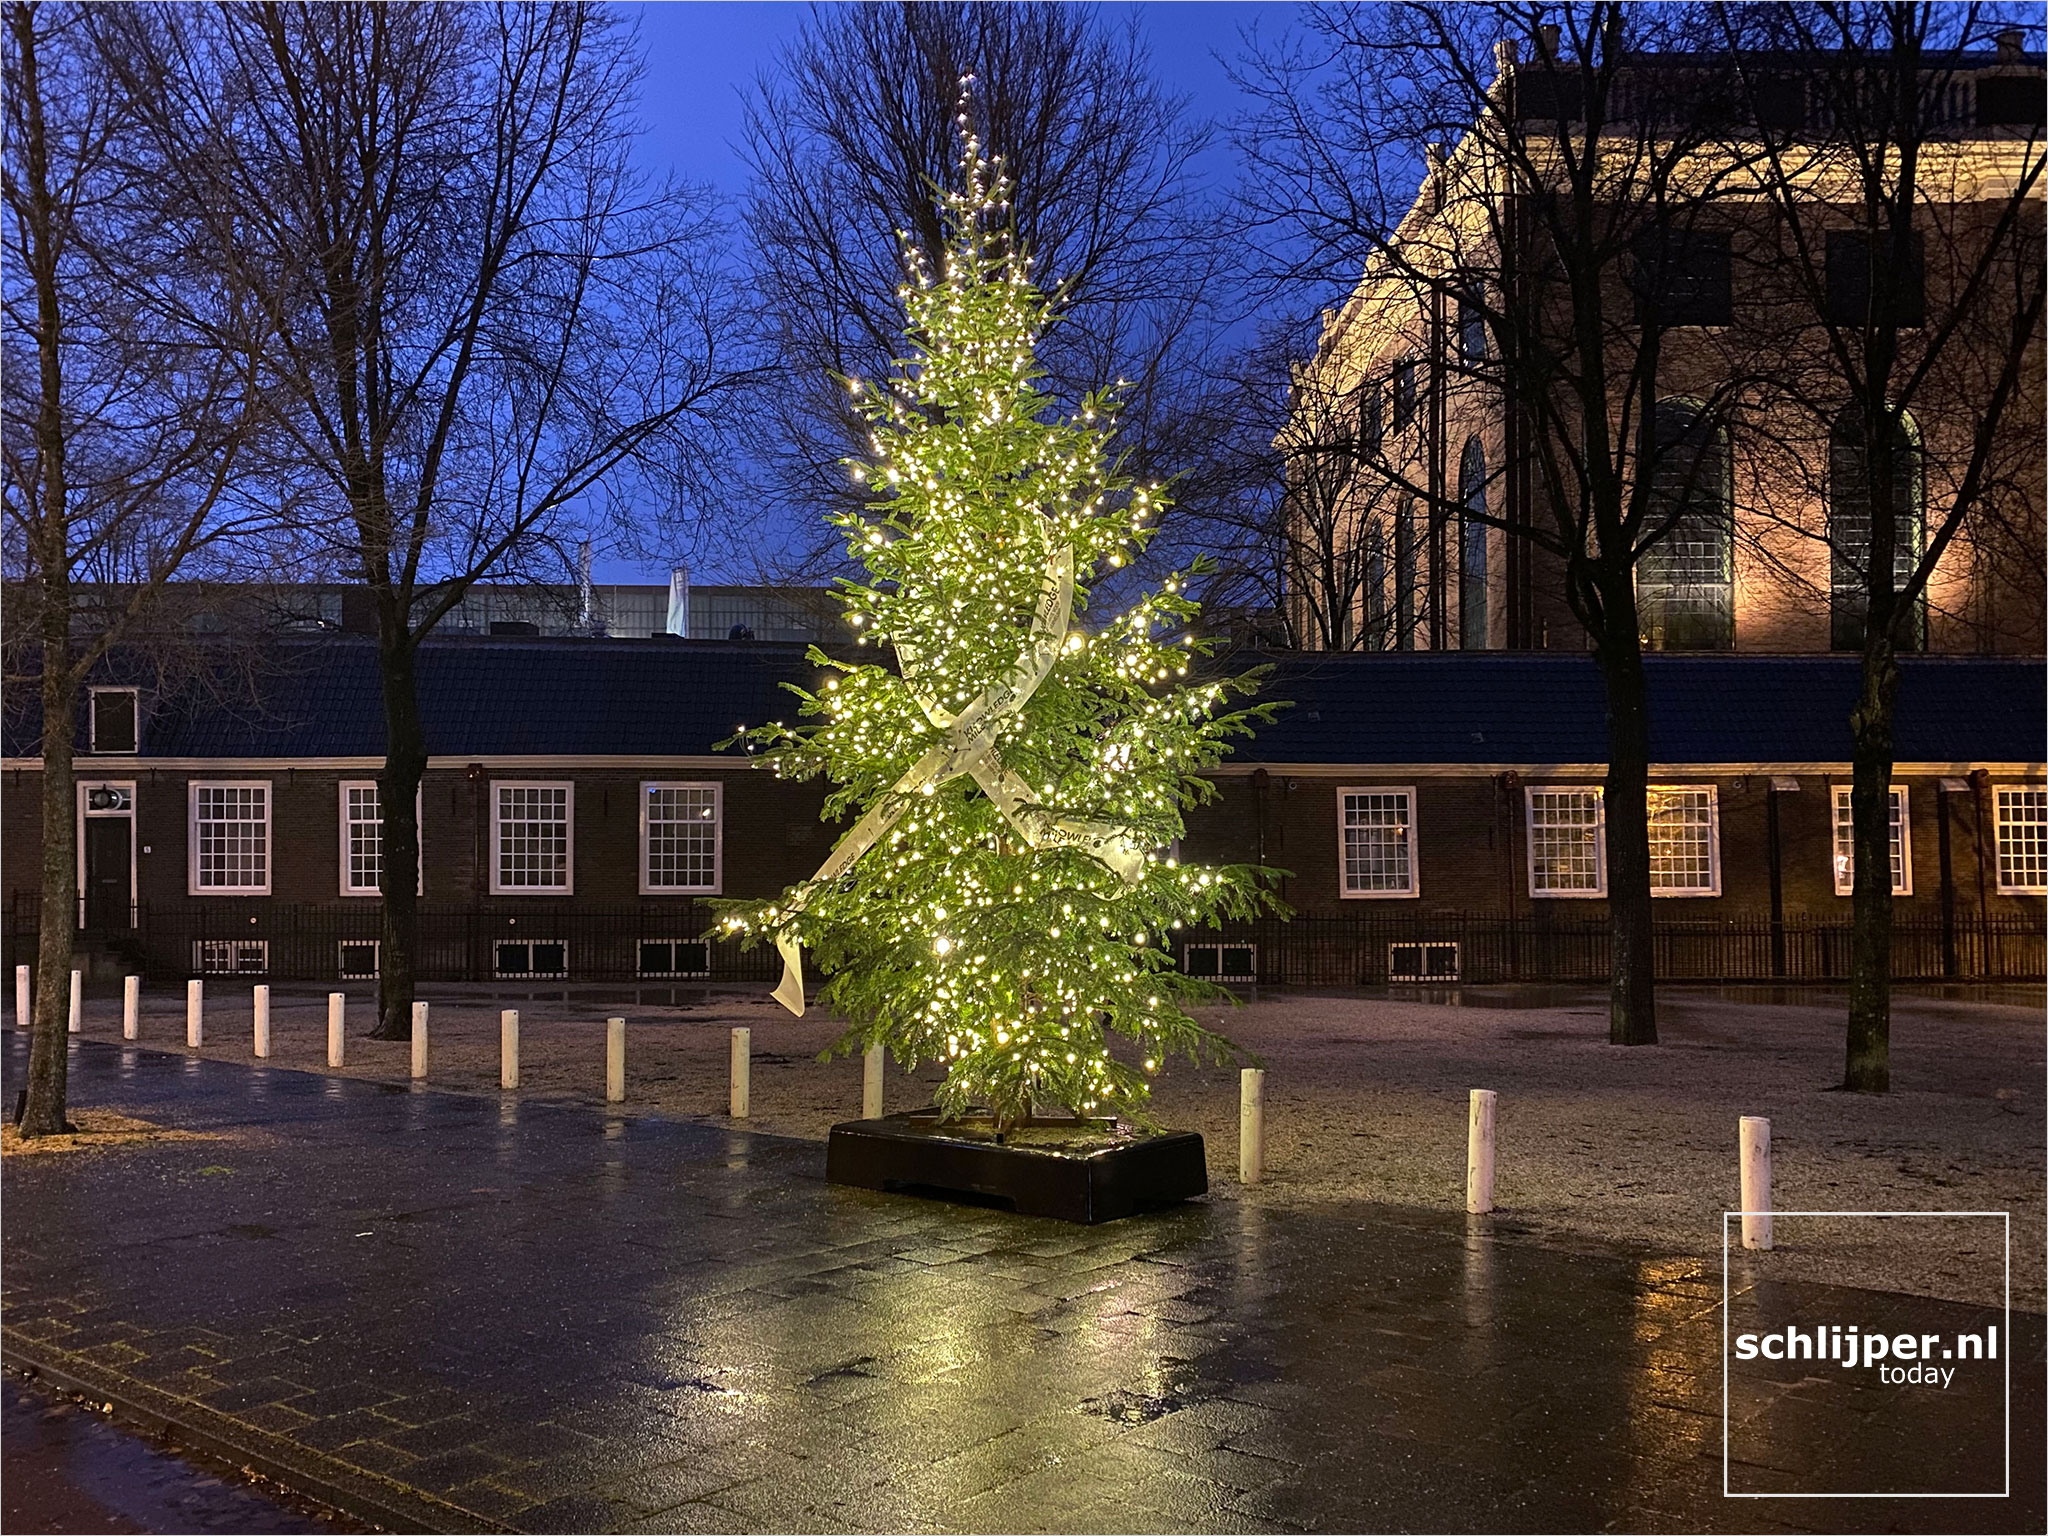 The Netherlands, Amsterdam, 27 december 2020